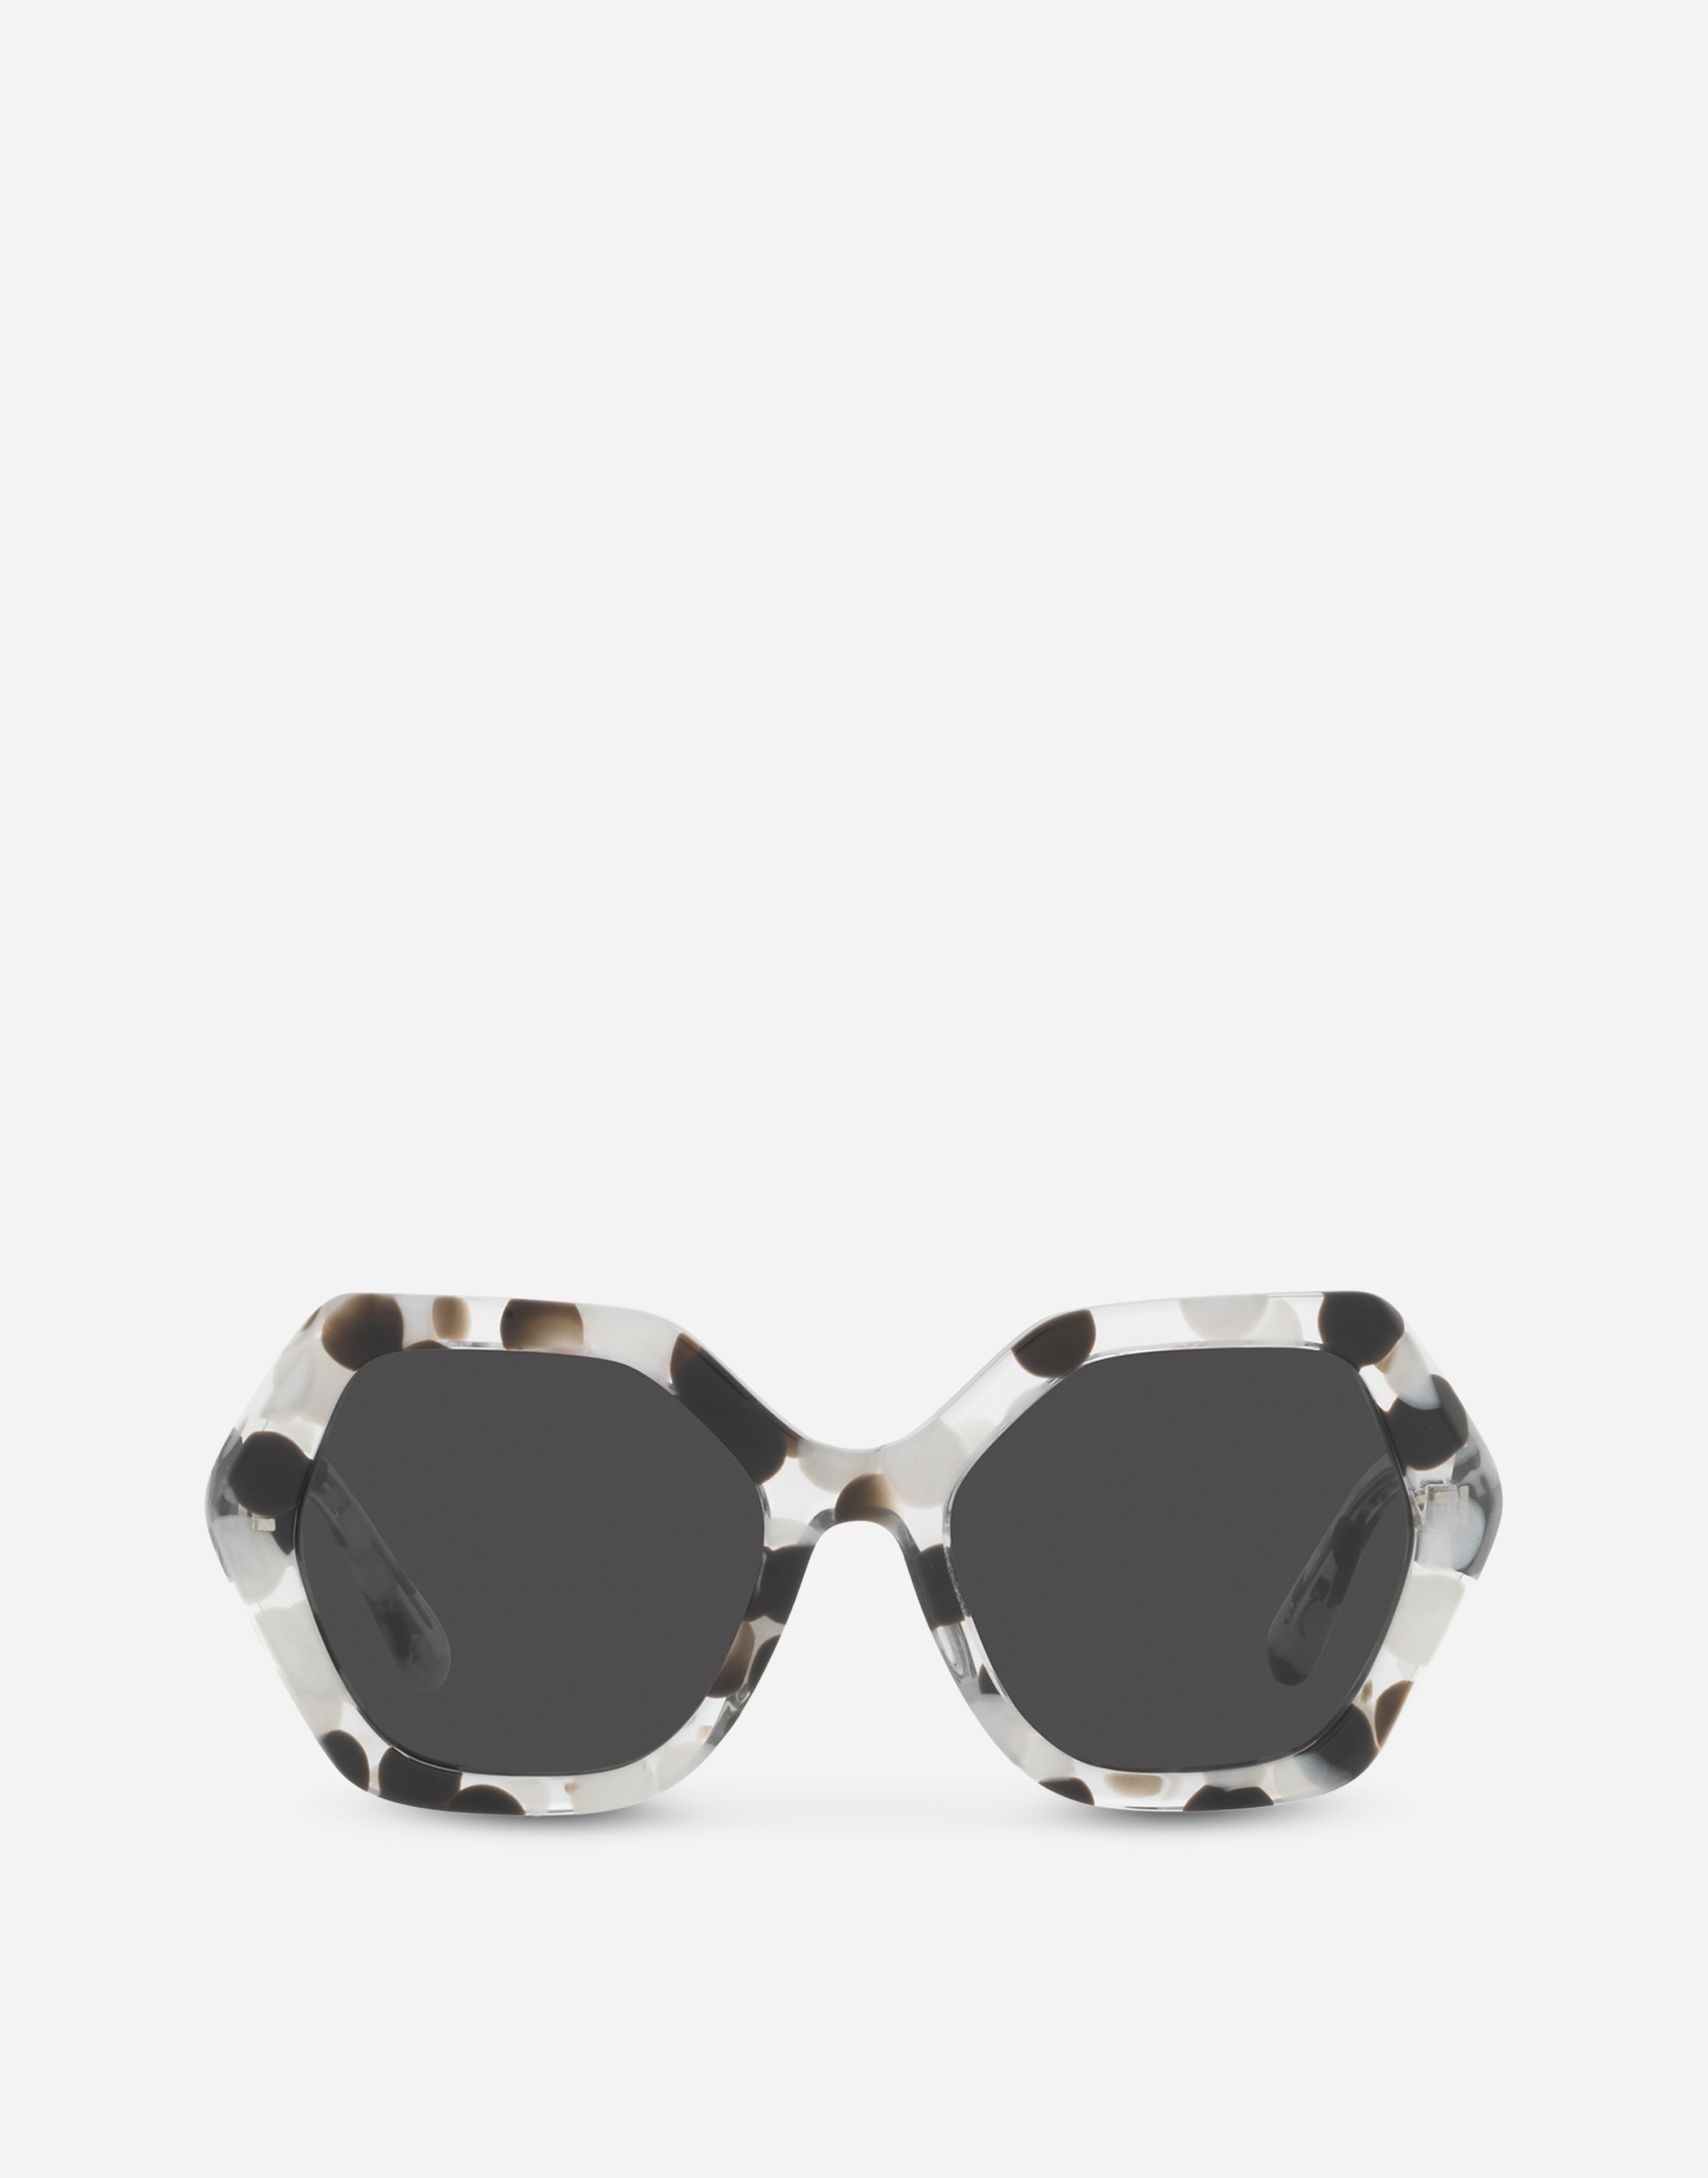 DG crossed sunglasses in Black and white bubble